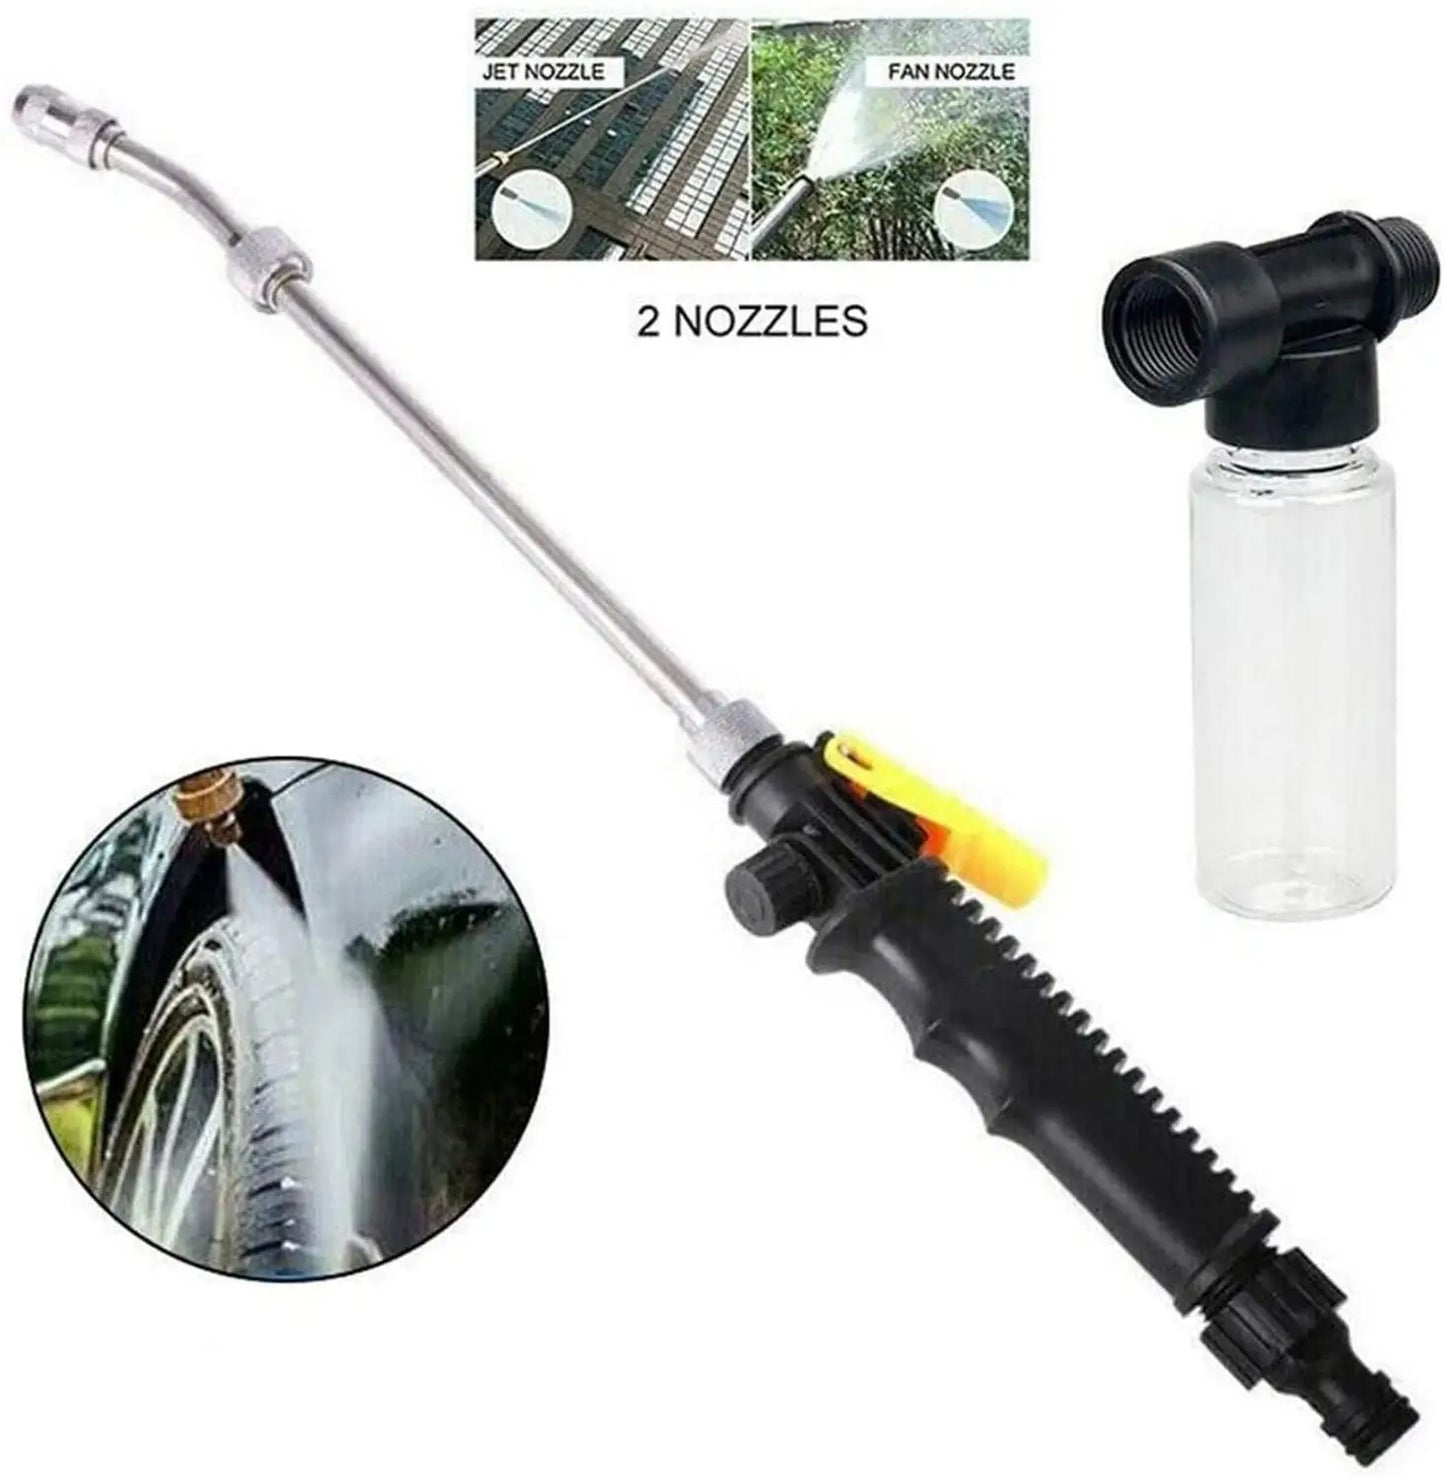 2-in-1 Garden Water Gun 2.0 - Water Jet Nozzle Fan Nozzle Safely Clean High Impact Washing Wand Water Spray Washer Water Gun